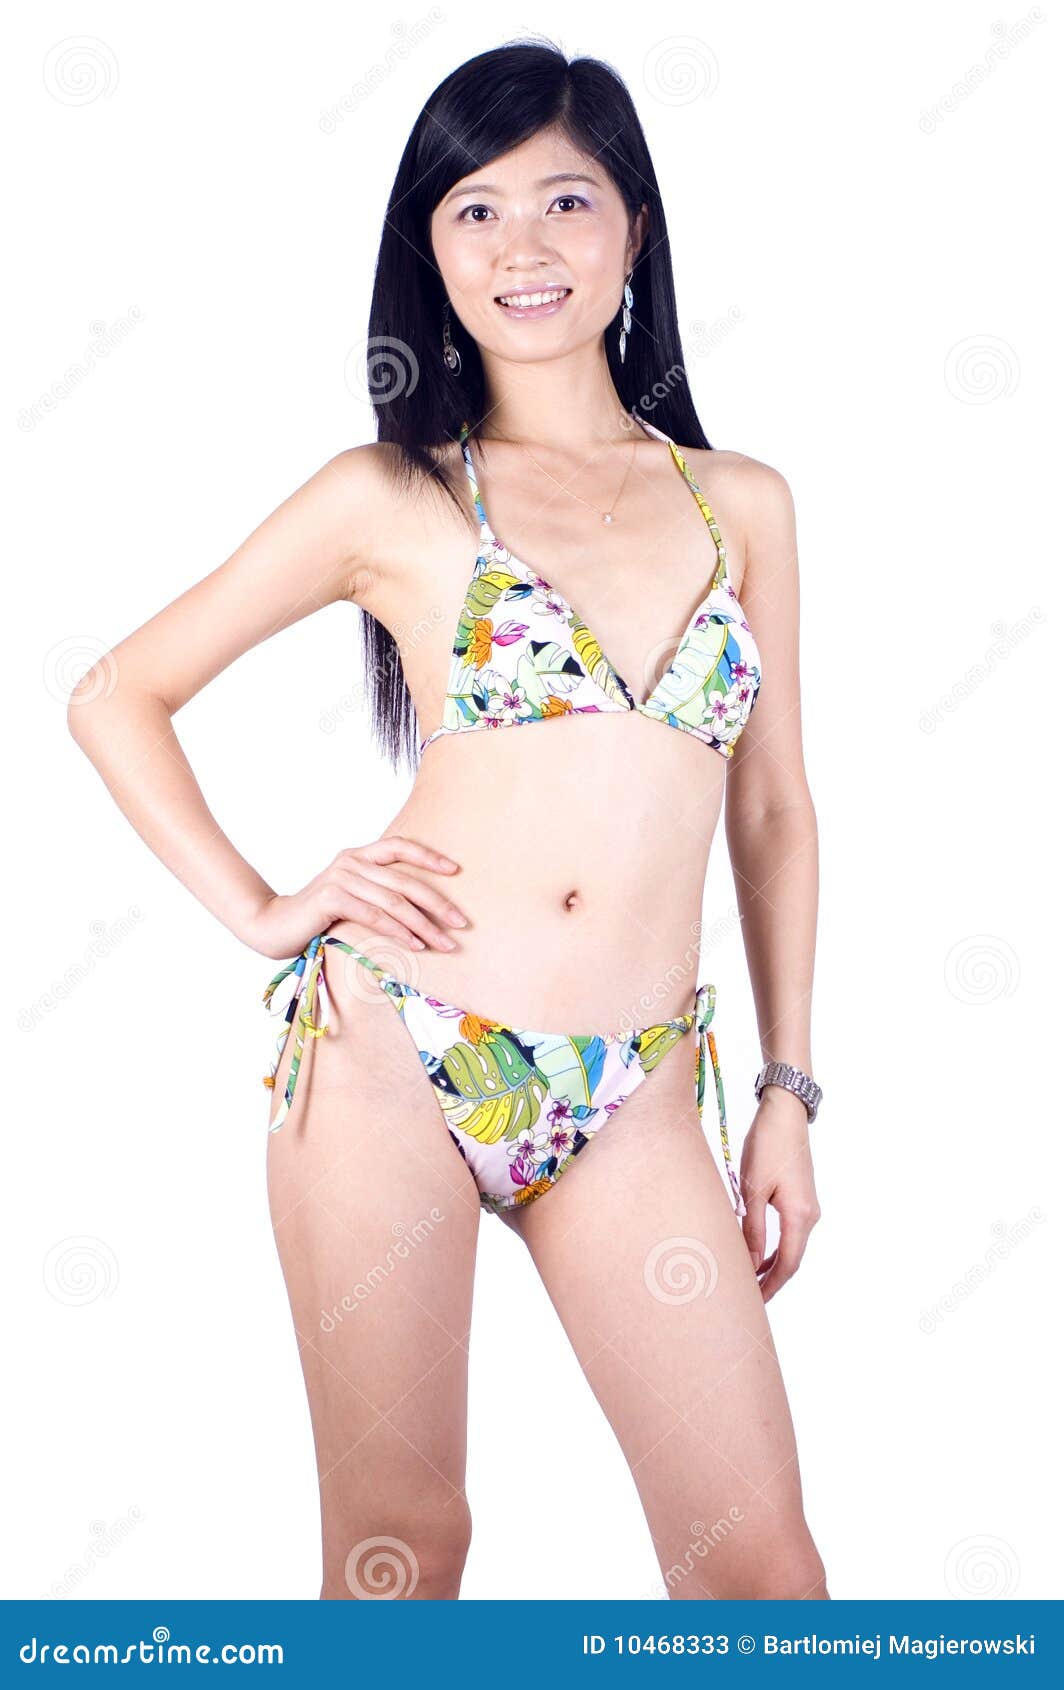 Verbeteren burgemeester Misverstand Chinese girl in bikini stock image. Image of asian, model - 10468333